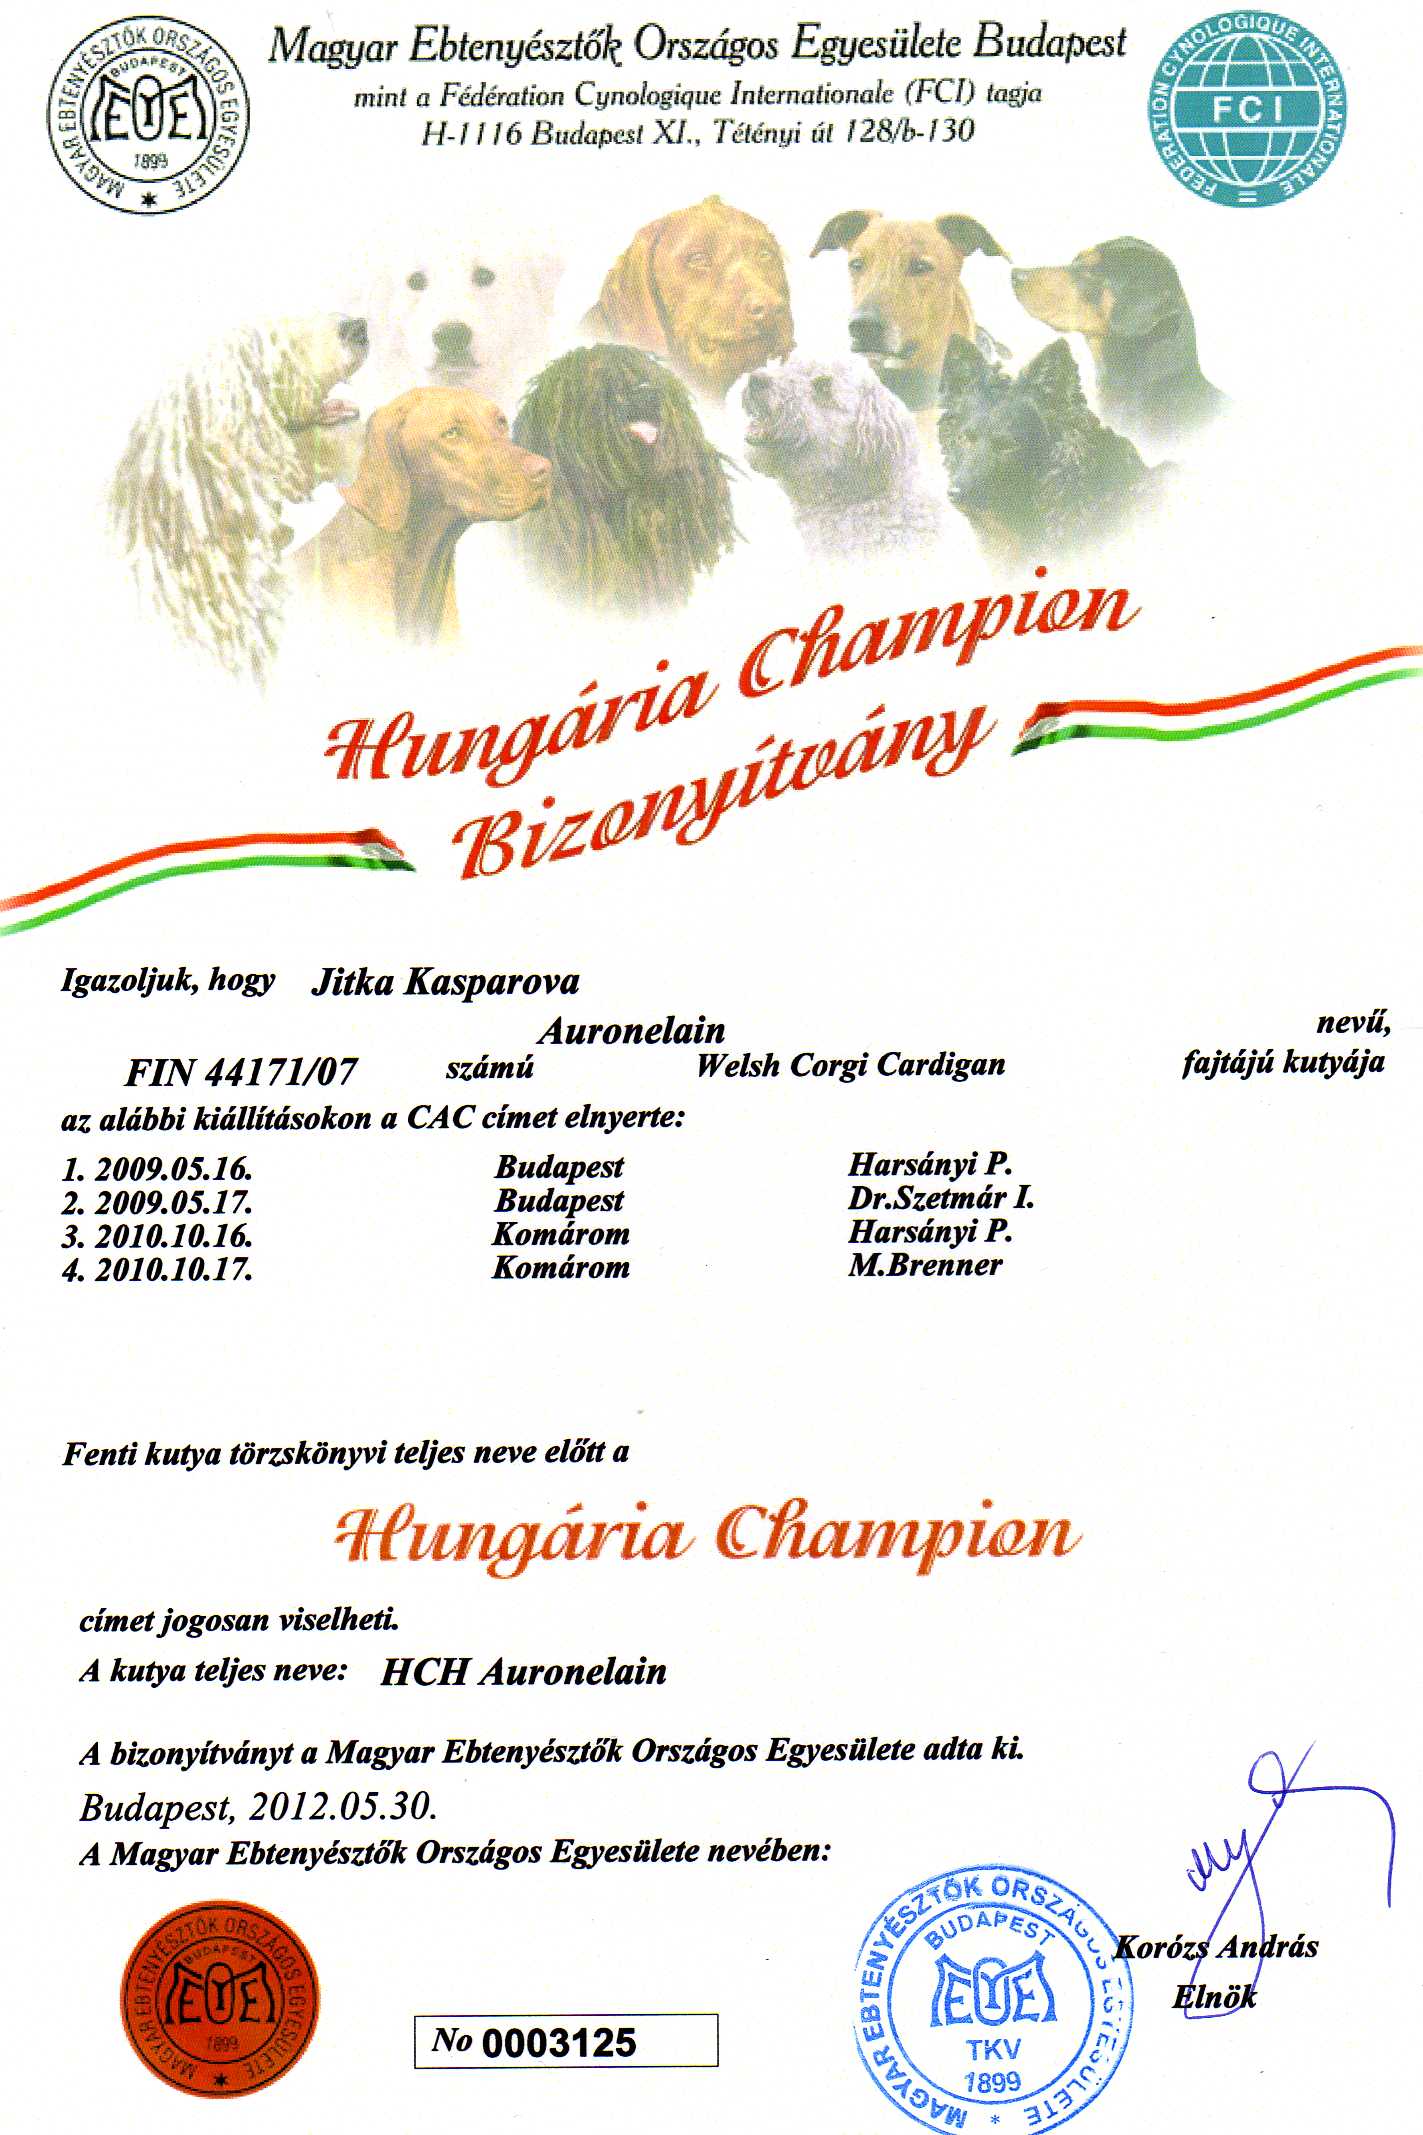 Hungarian champion